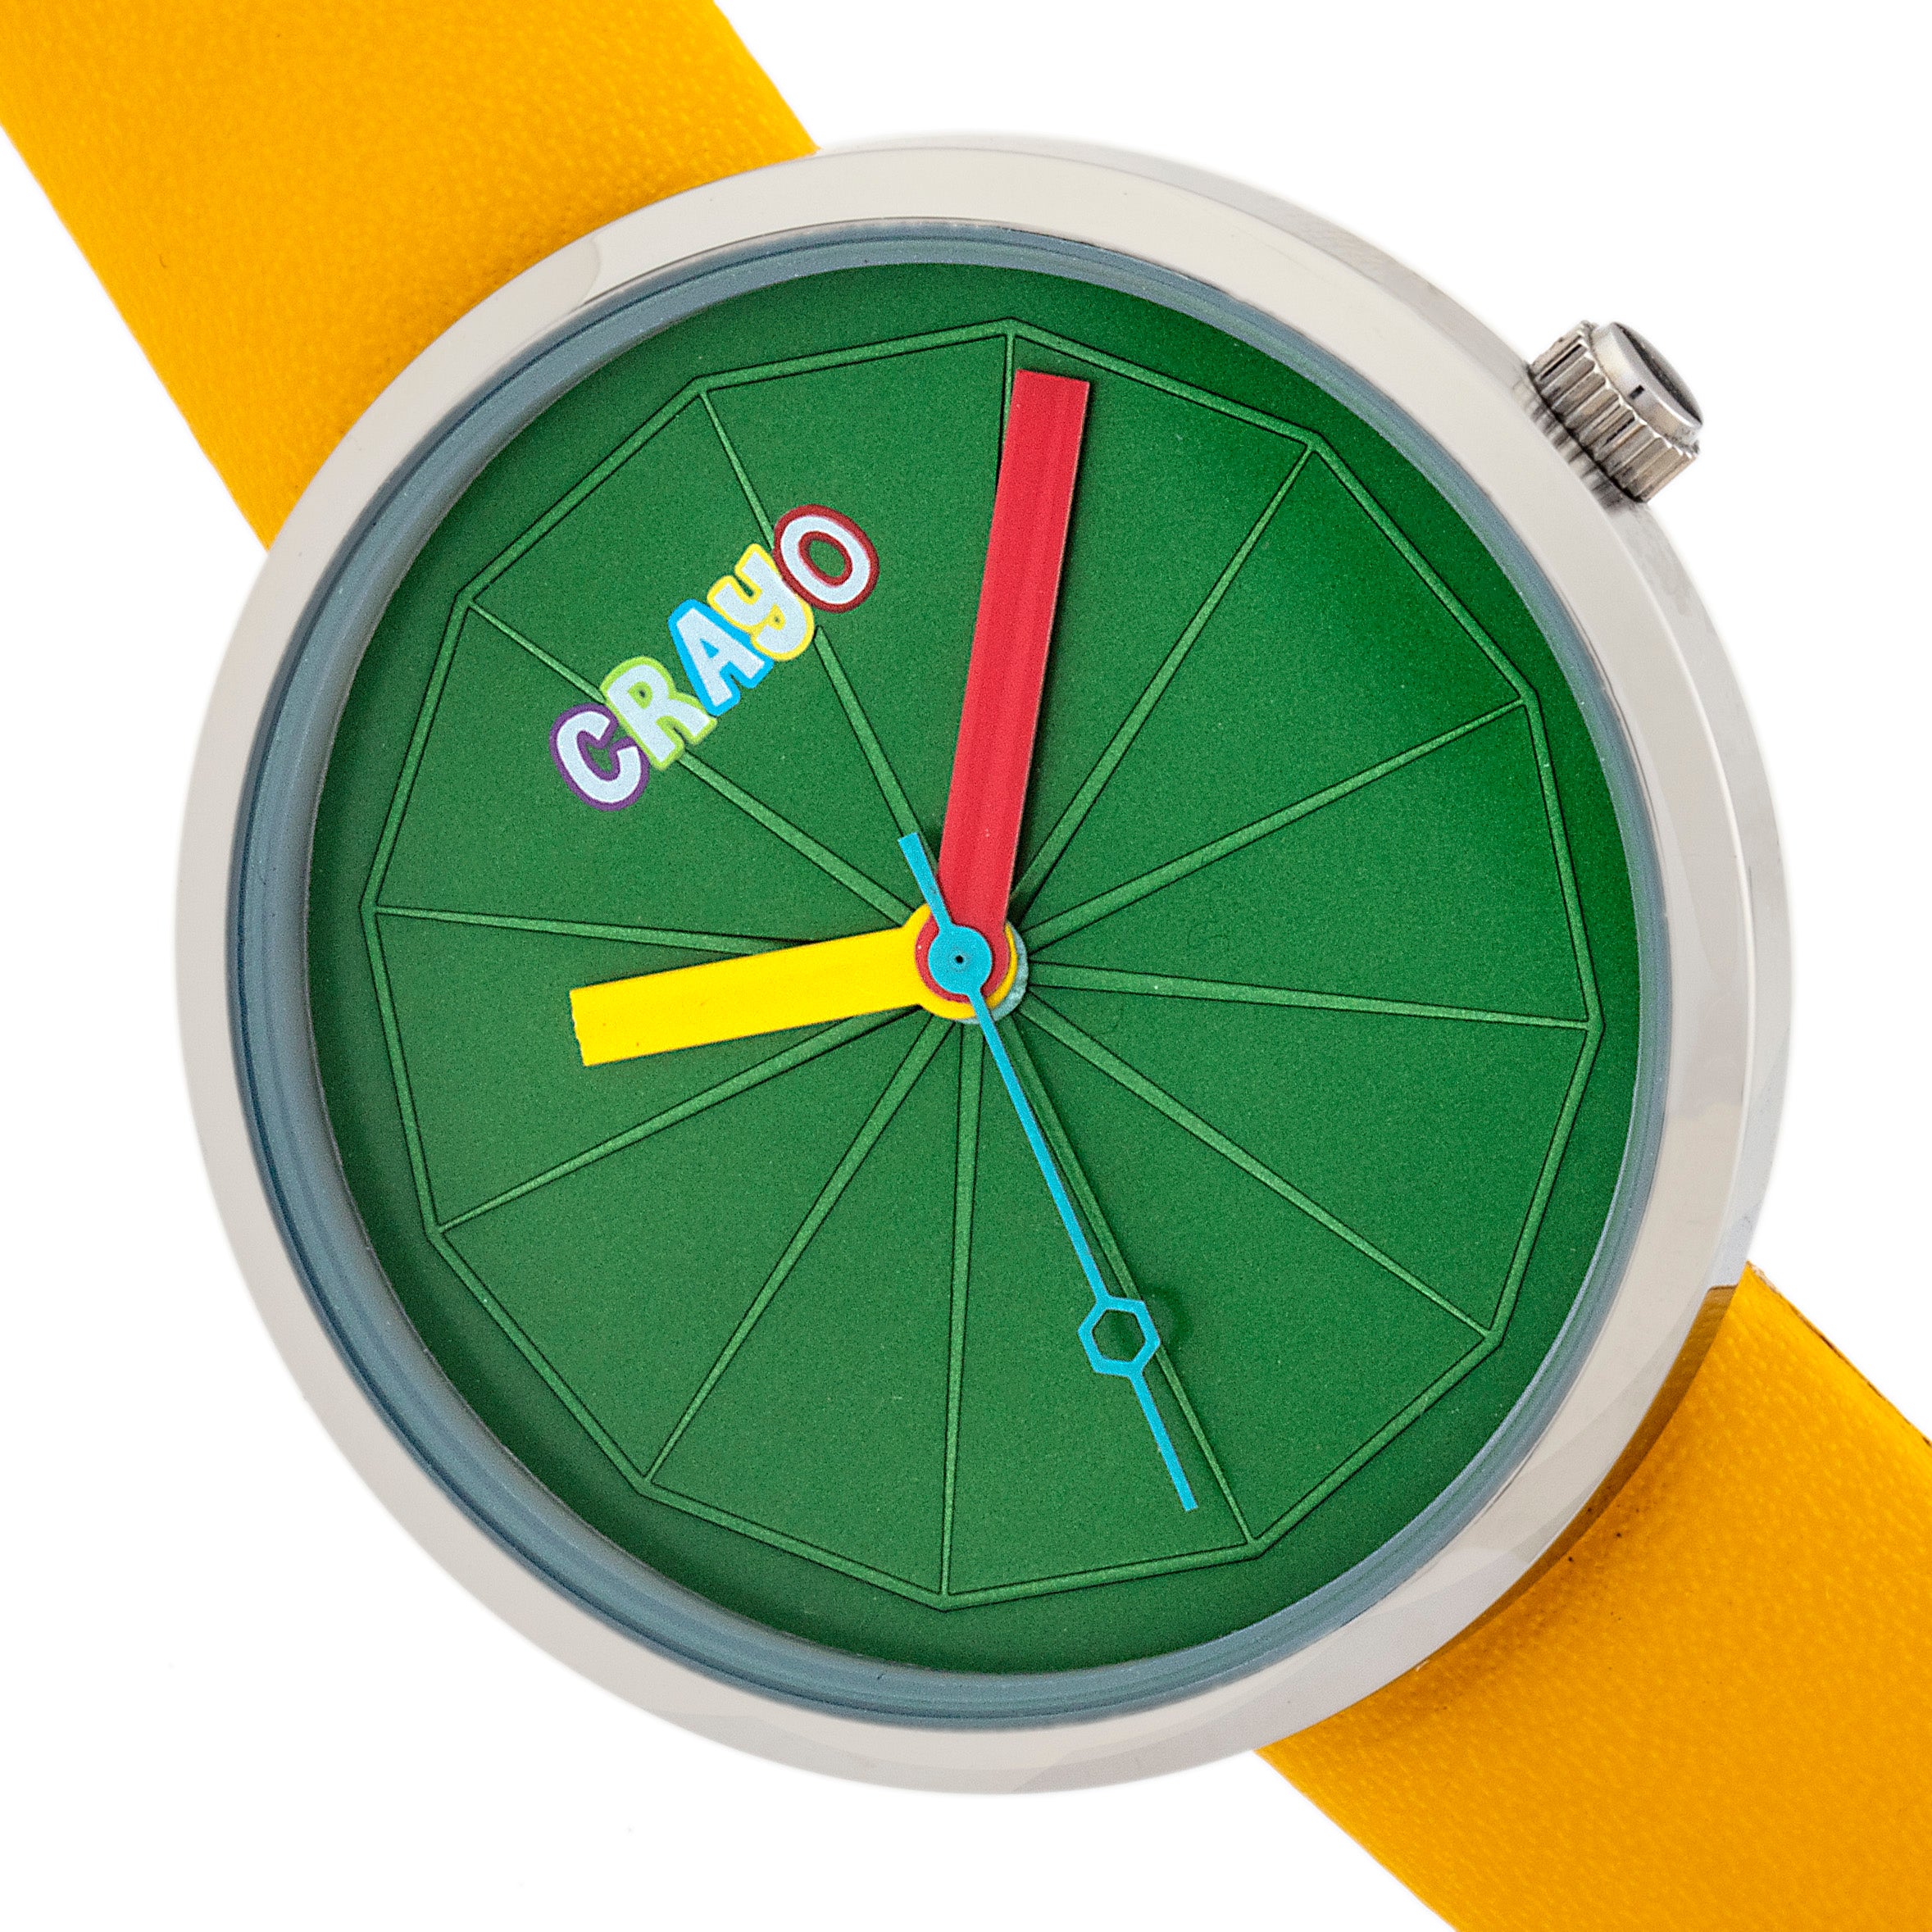 Crayo Metric Unisex Watch - Yellow  - CRACR5805